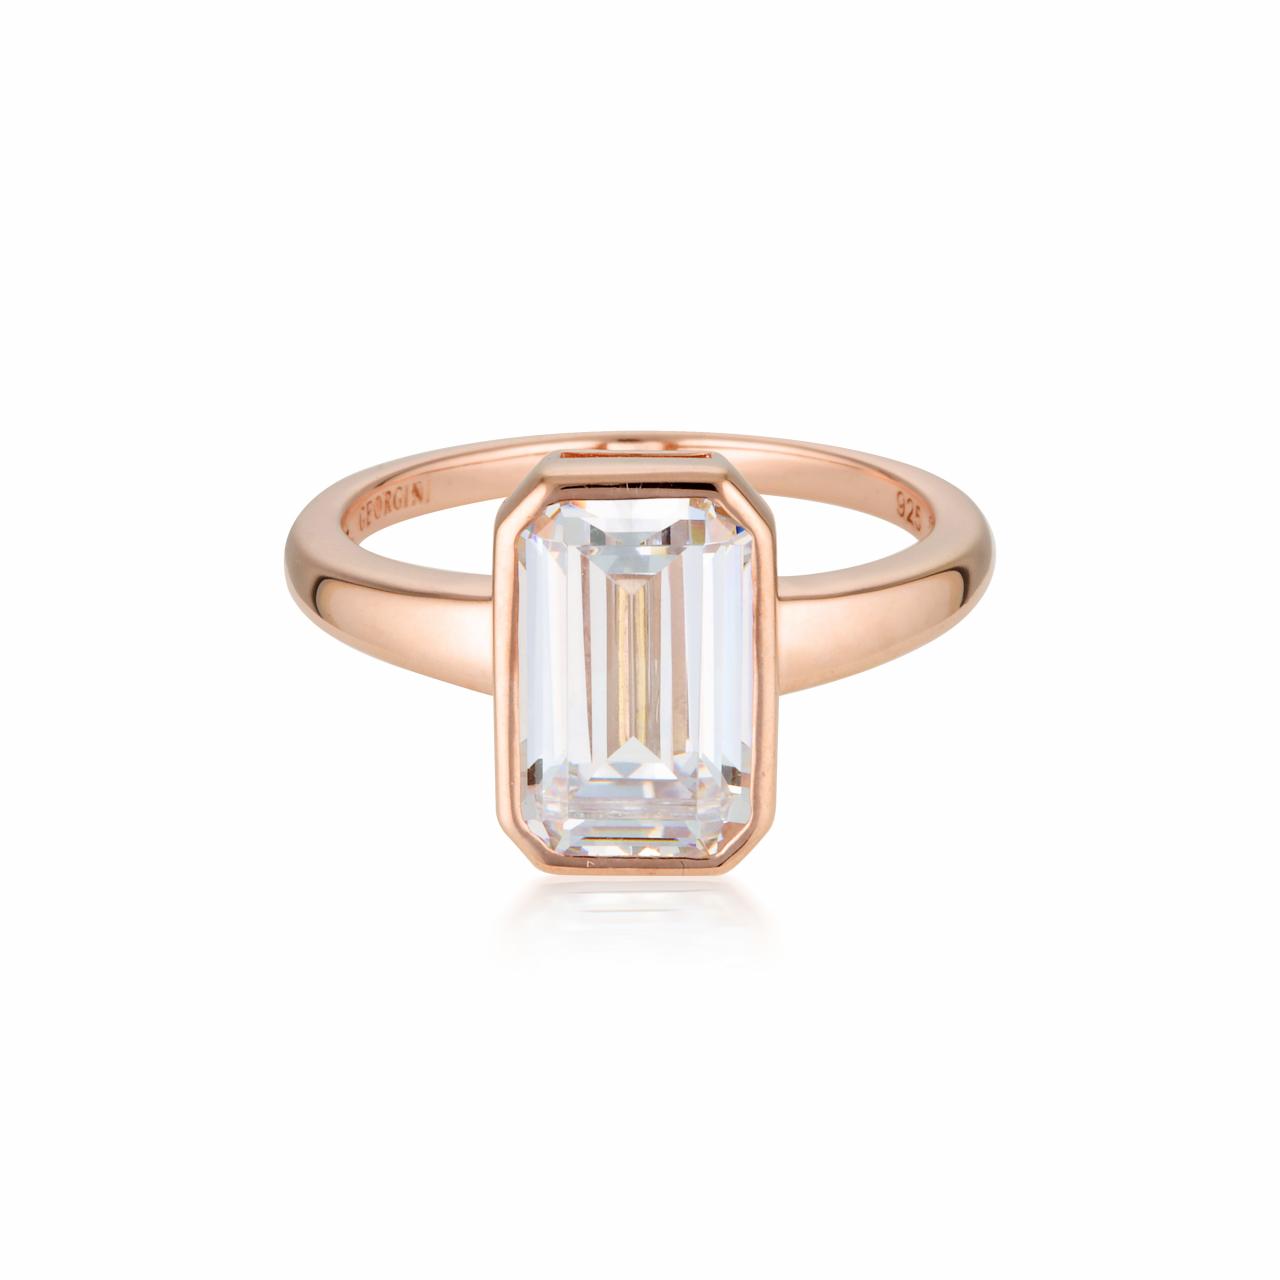 Georgini Rose Gold Plated Luxe Sontuosa Ring